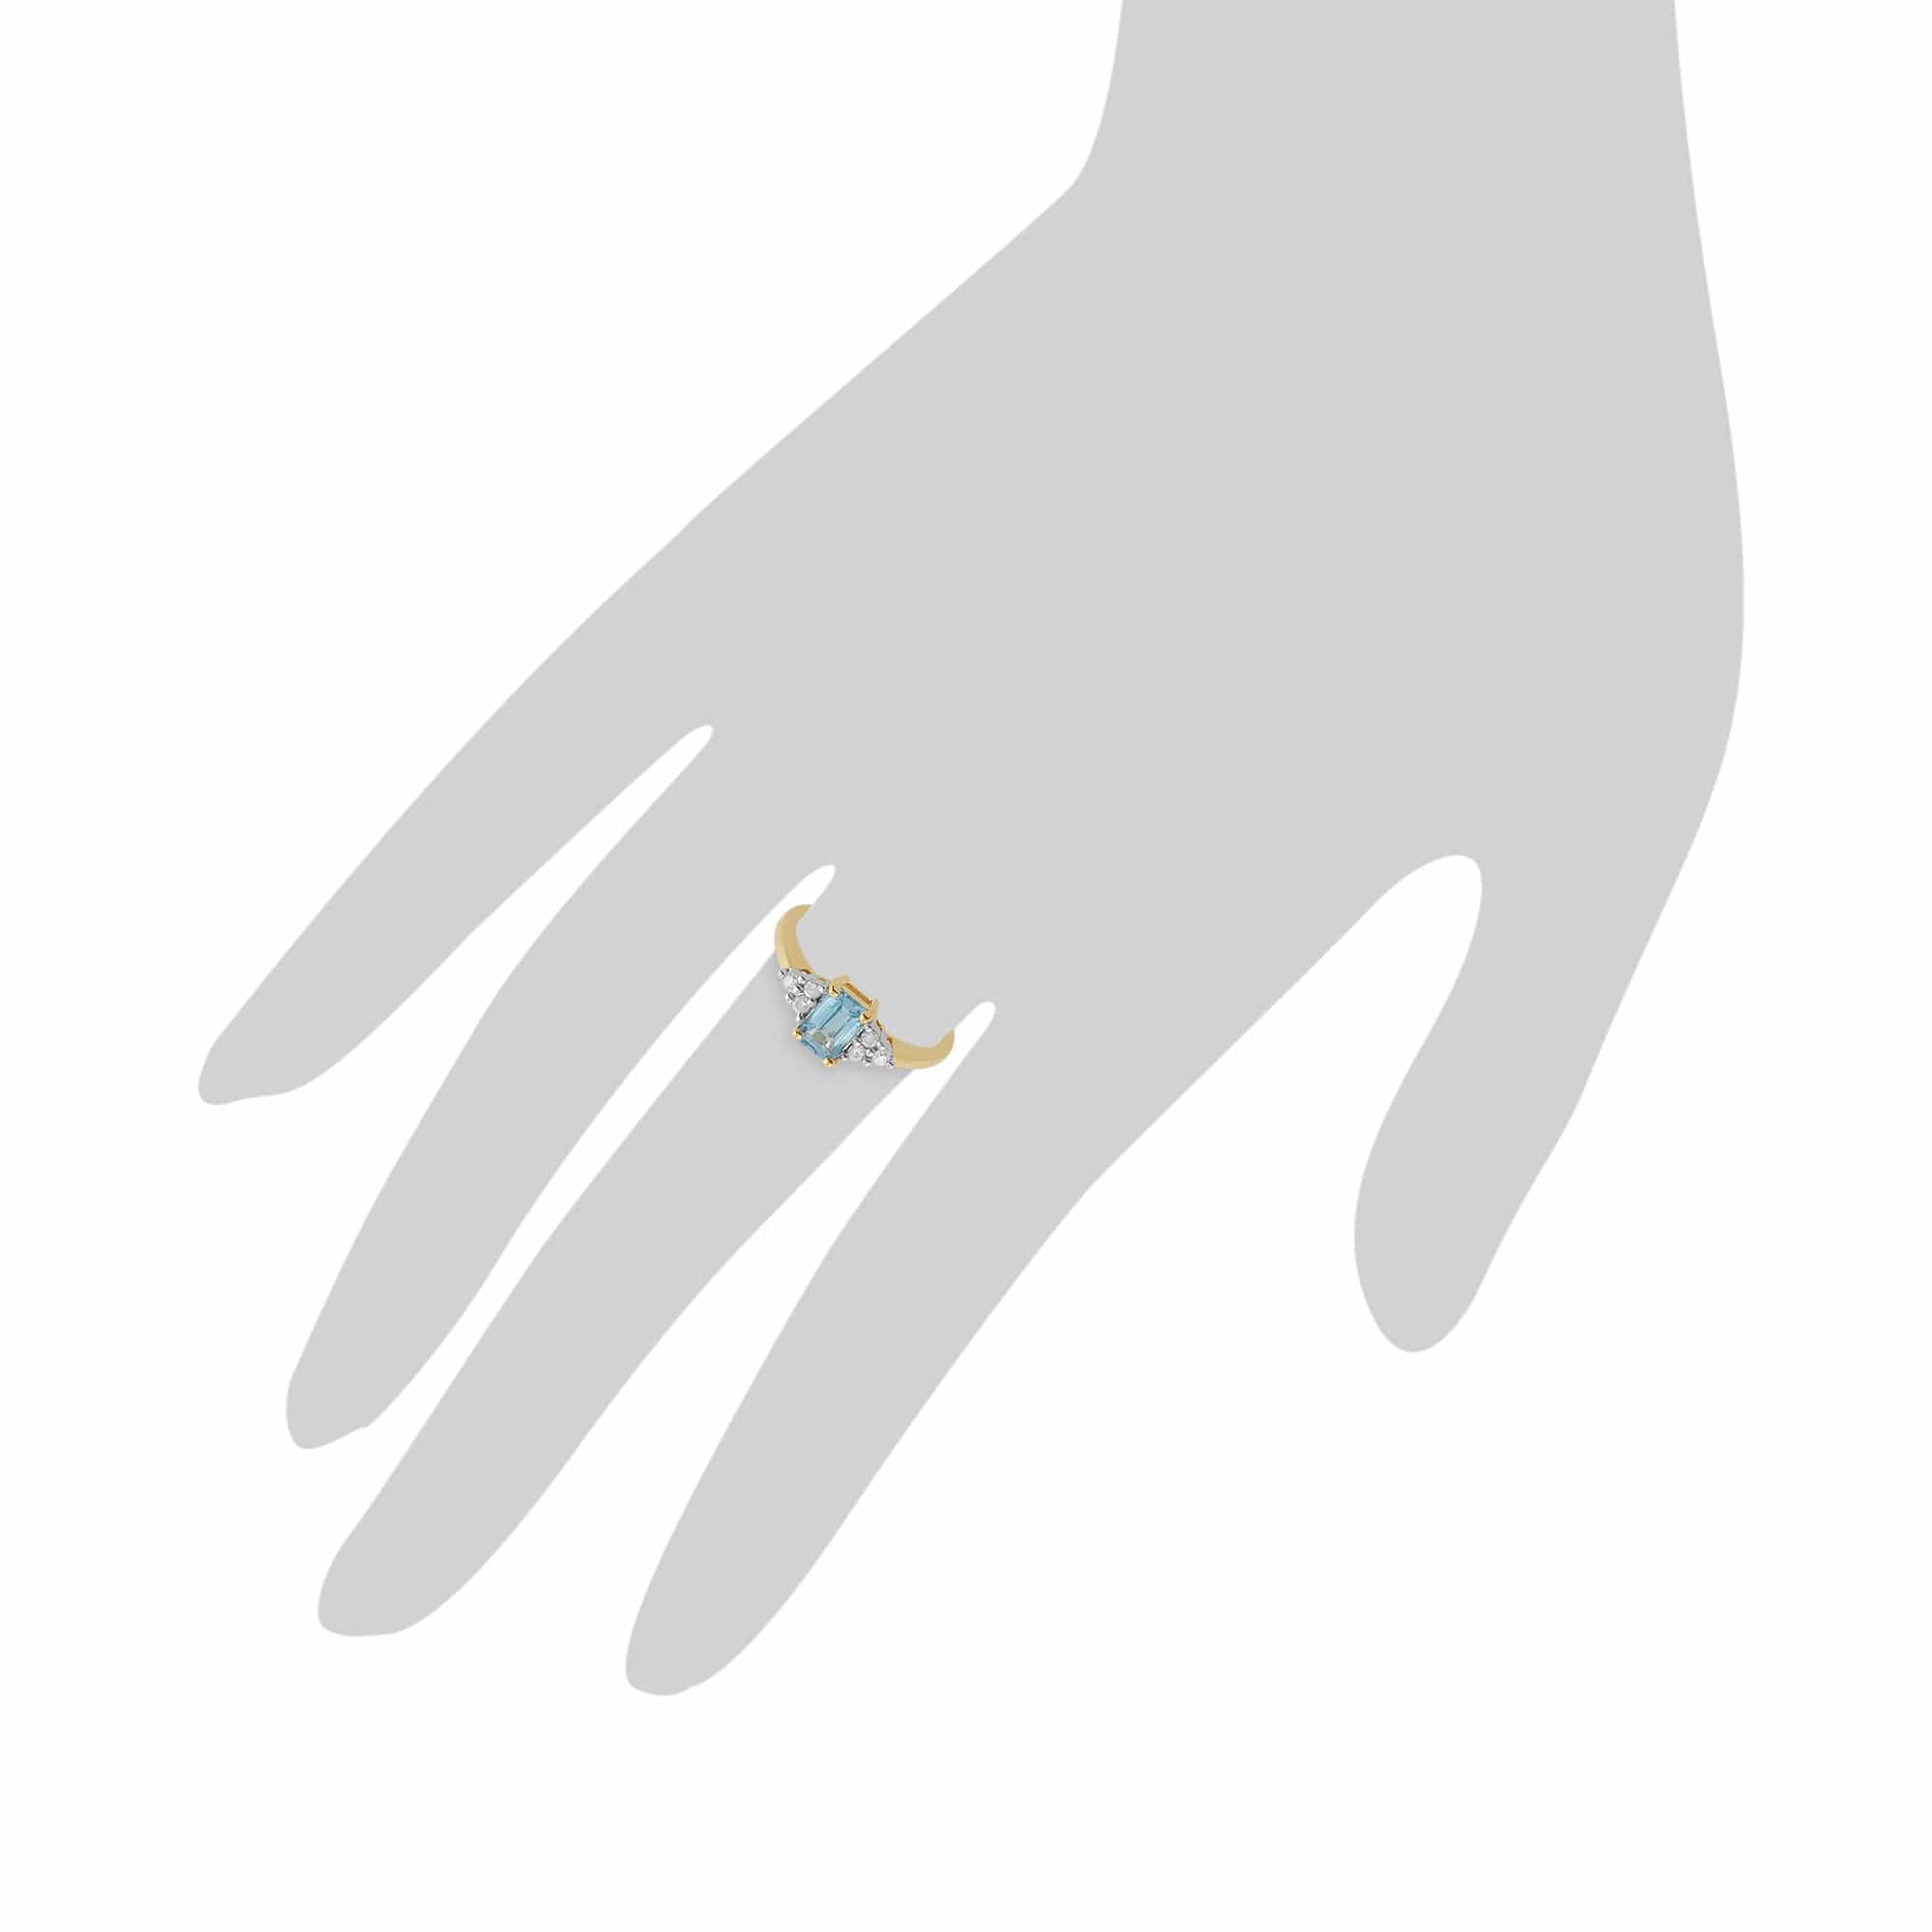 Gemondo 9ct Yellow Gold 0.68ct Blue Topaz & Diamond Ring Image 3